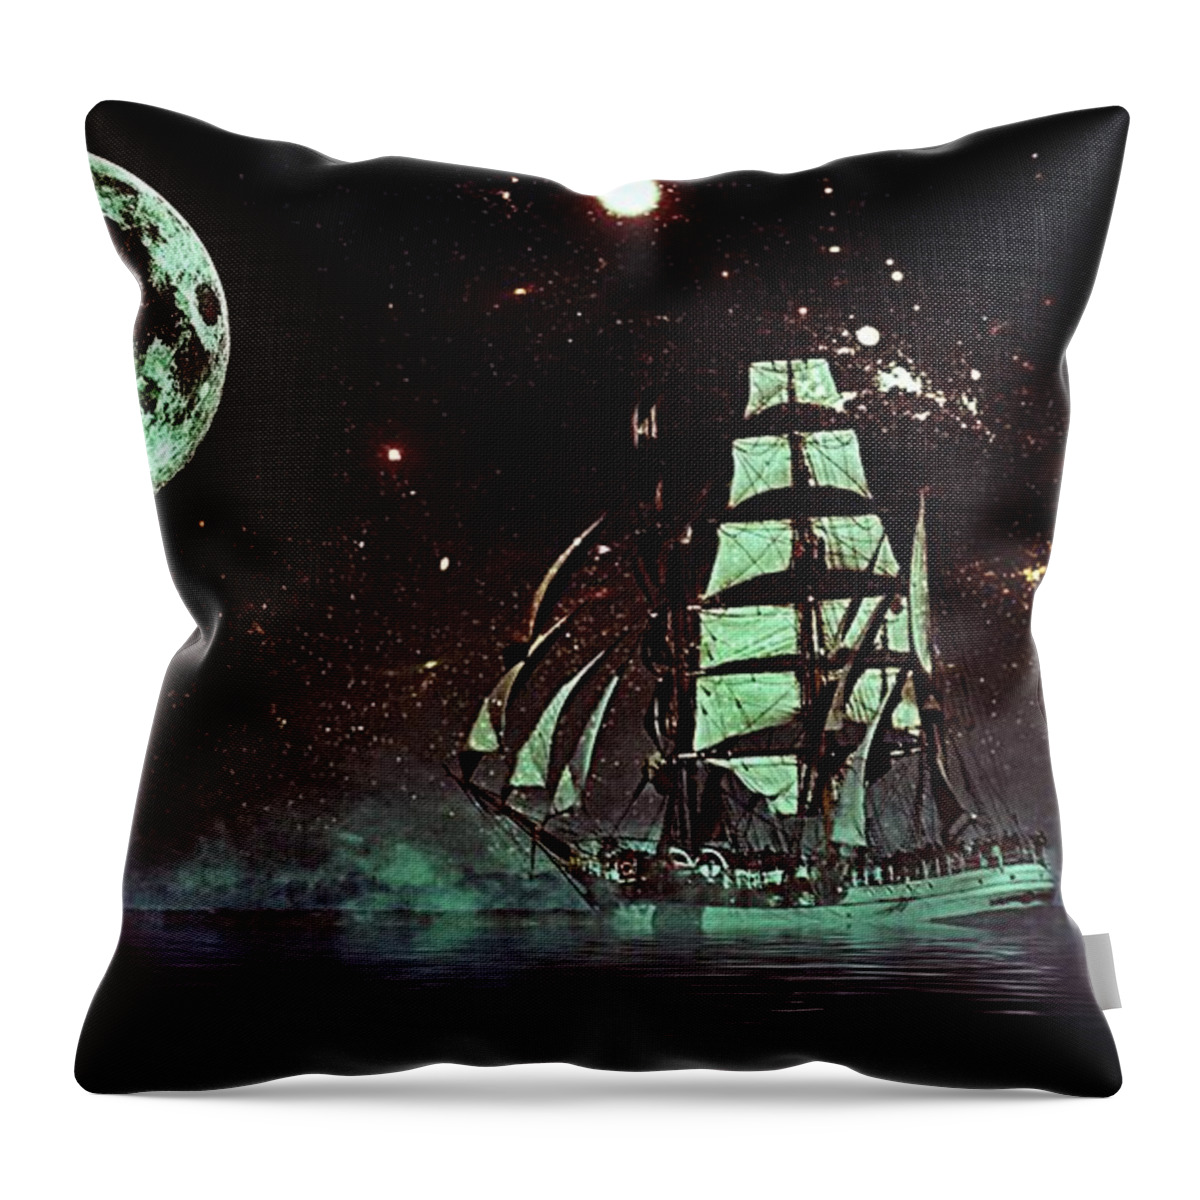 Moonlight Sailing Throw Pillow featuring the photograph Moonlight Sailing by Blair Stuart